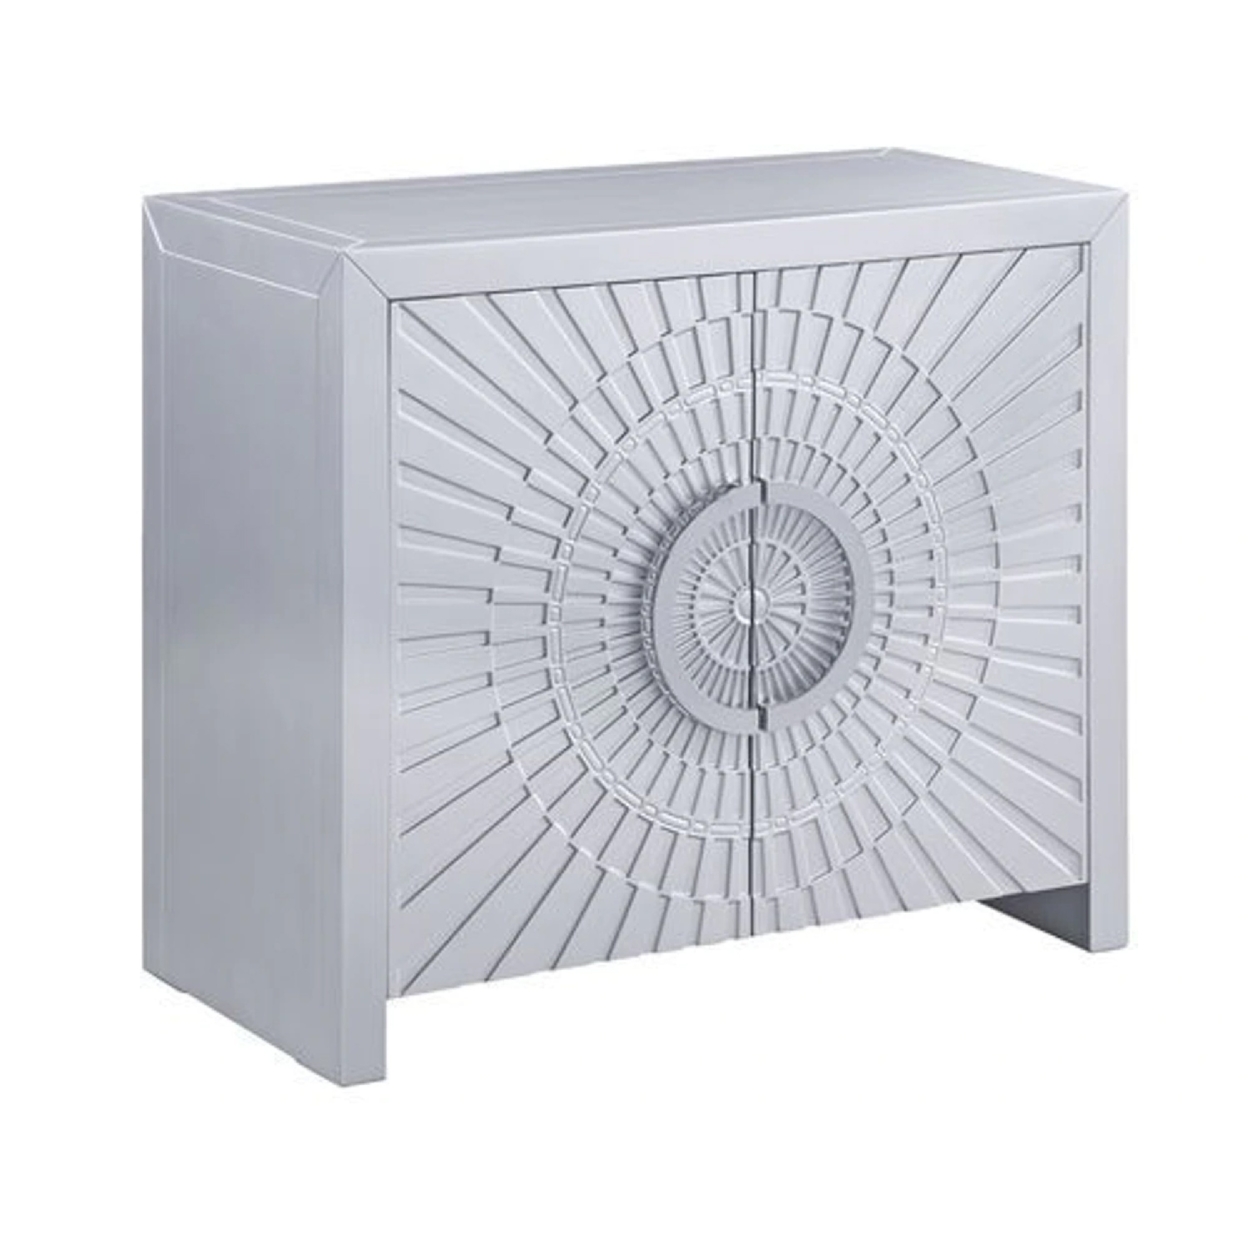 37 Inch 2 Door Wood Storage Cabinet Console Table, Sunburst Design, Silver- Saltoro Sherpi